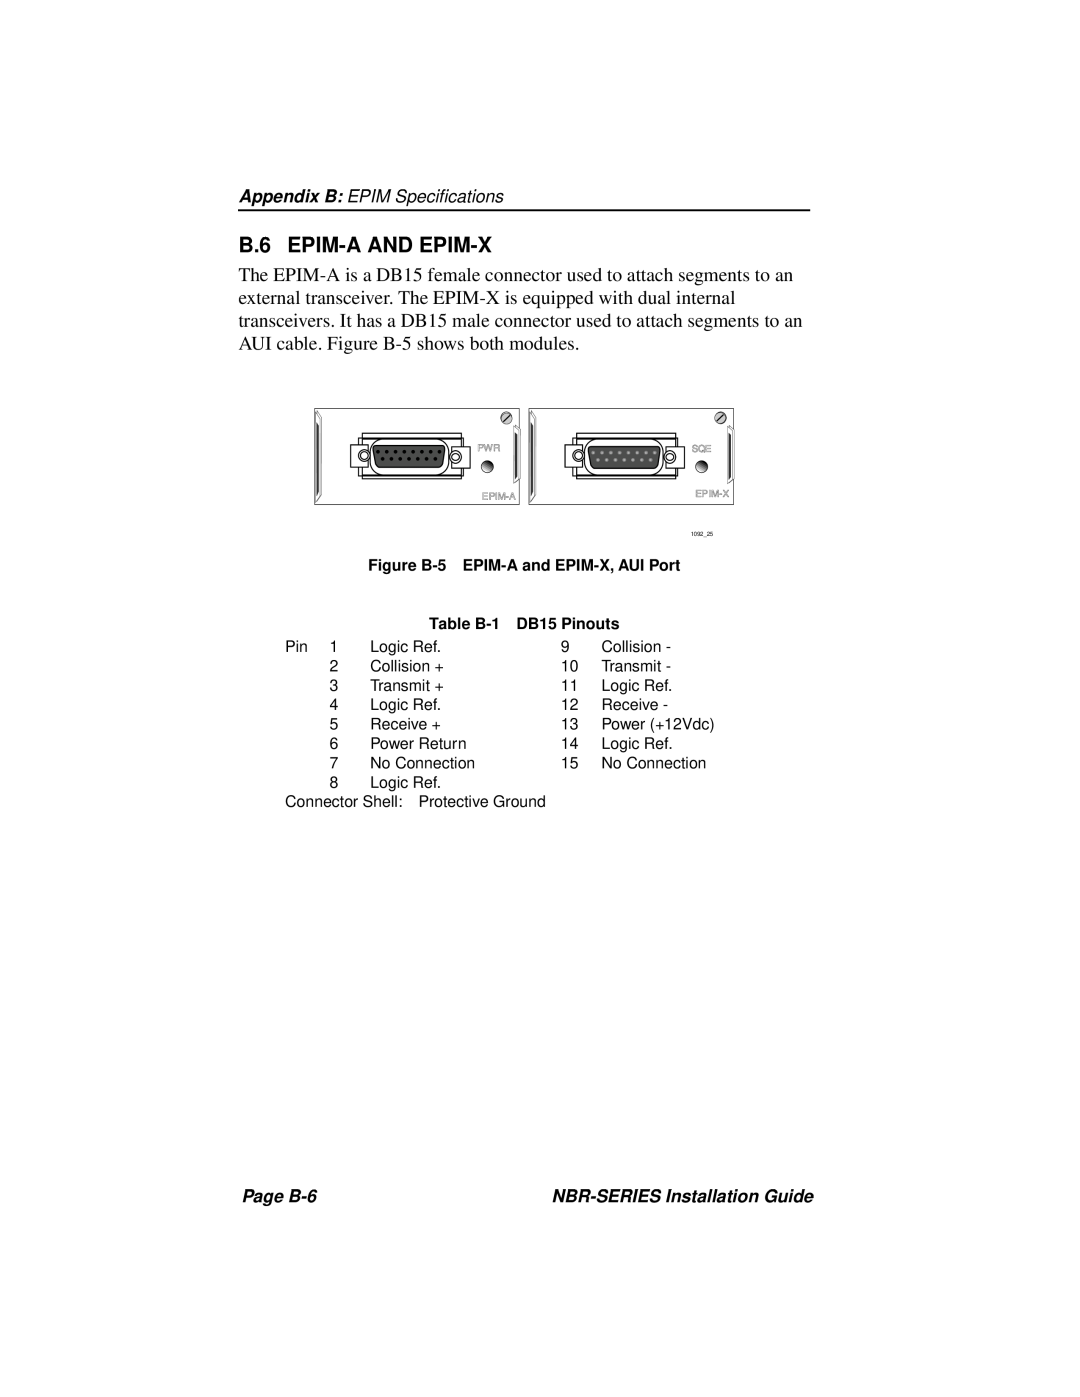 Cabletron Systems NBR-620, NBR-420 B.6 EPIM-A AND EPIM-X, Figure B-5 EPIM-A and EPIM-X, AUI Port, Table B-1, DB15 Pinouts 